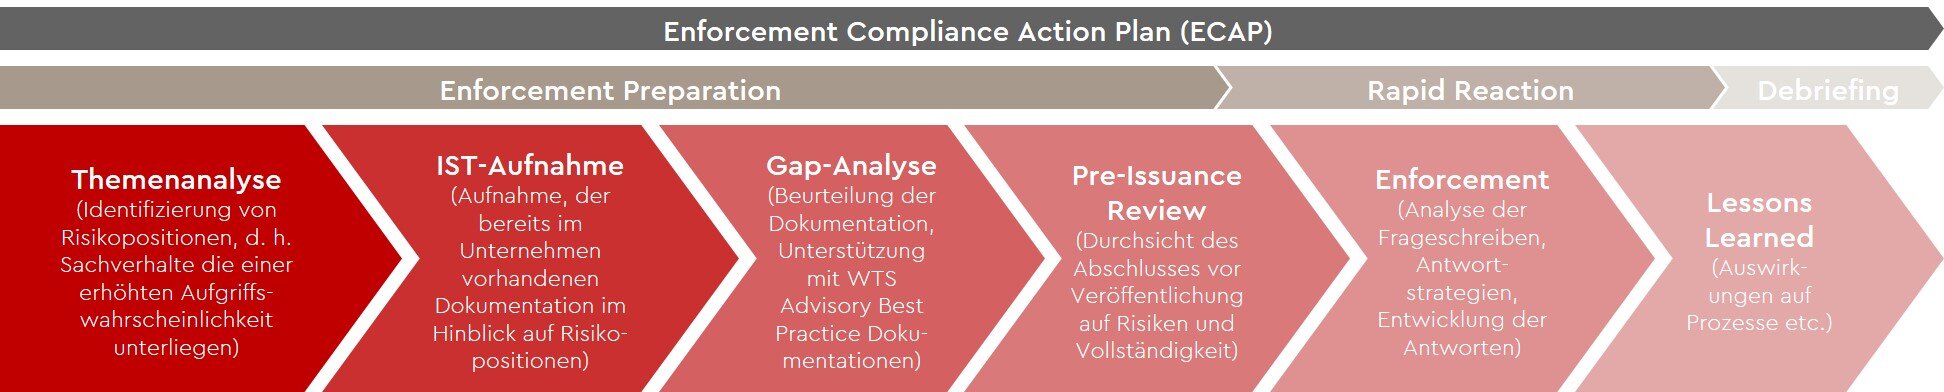 schaubild-enforcement-compliance-action-plan